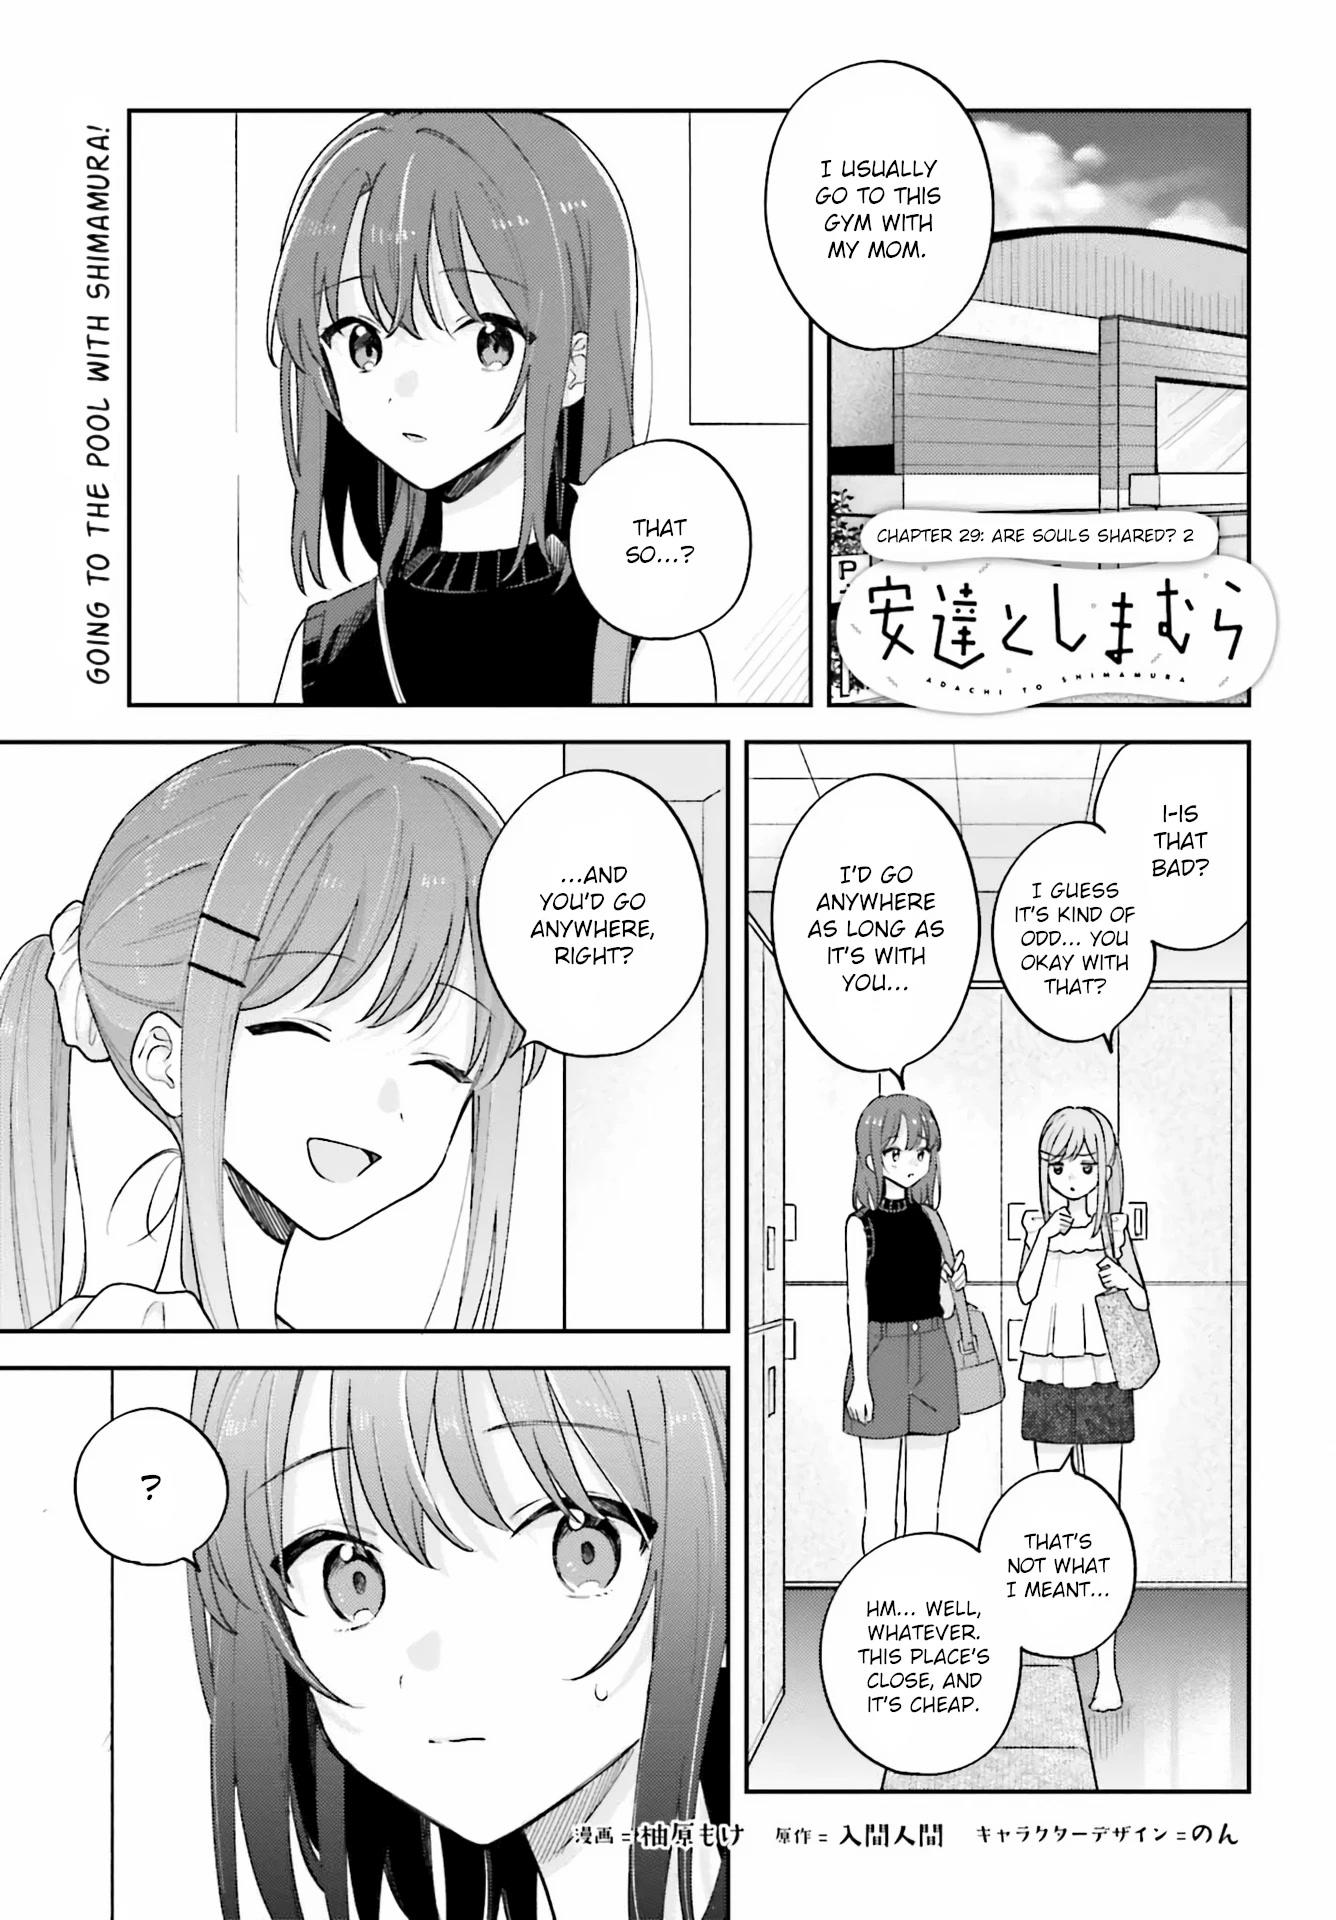 Read Adachi To Shimamura (Moke Yuzuhara) Chapter 30.1: Adachi Revival on  Mangakakalot